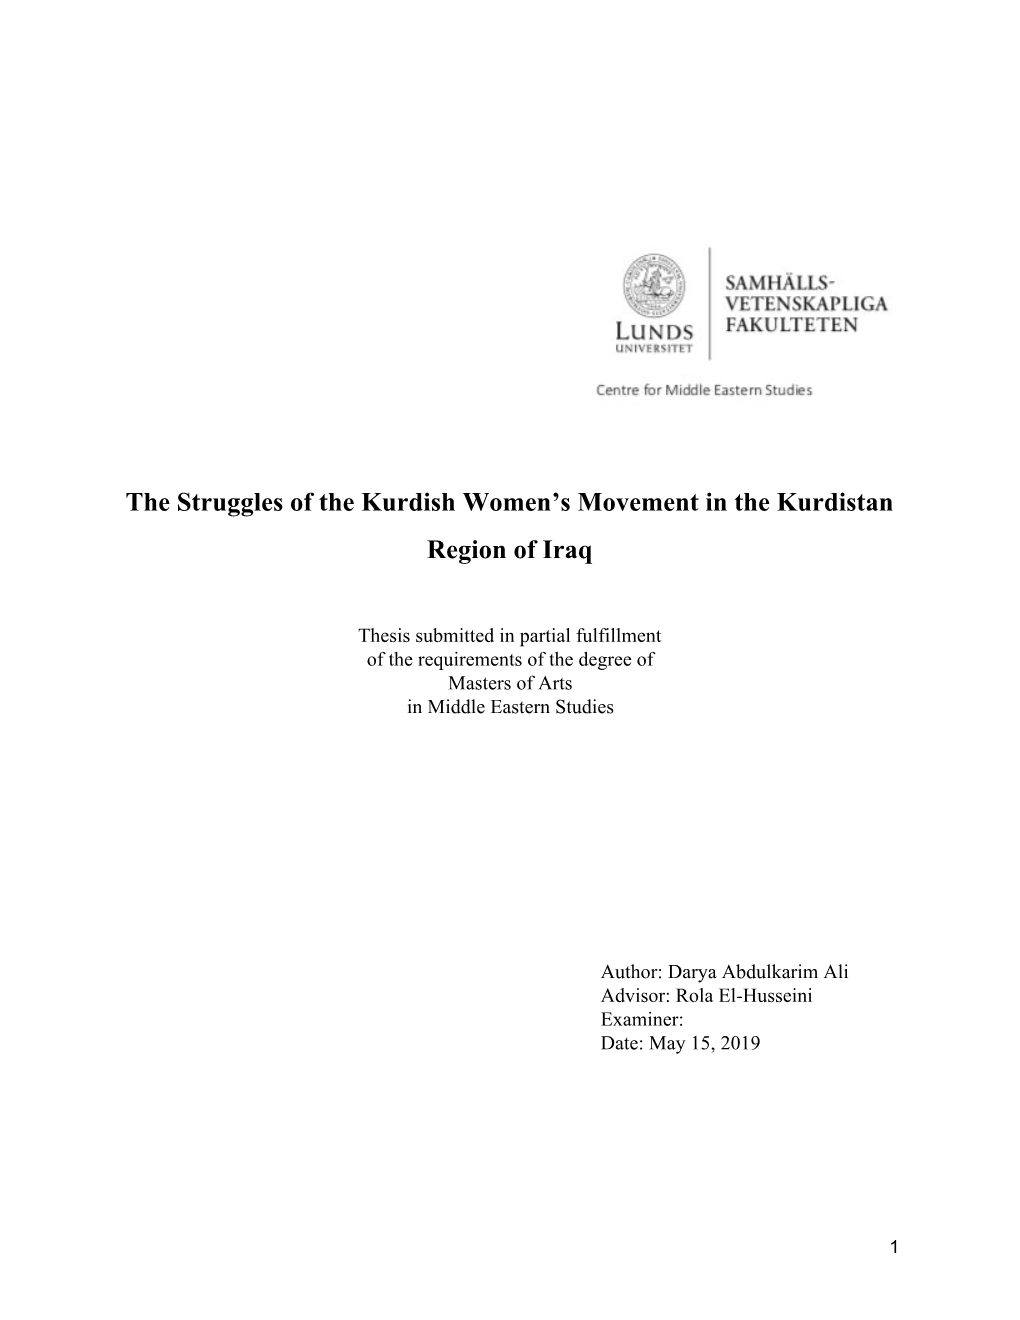 The Struggles of the Kurdish Women's Movement in the Kurdistan Region